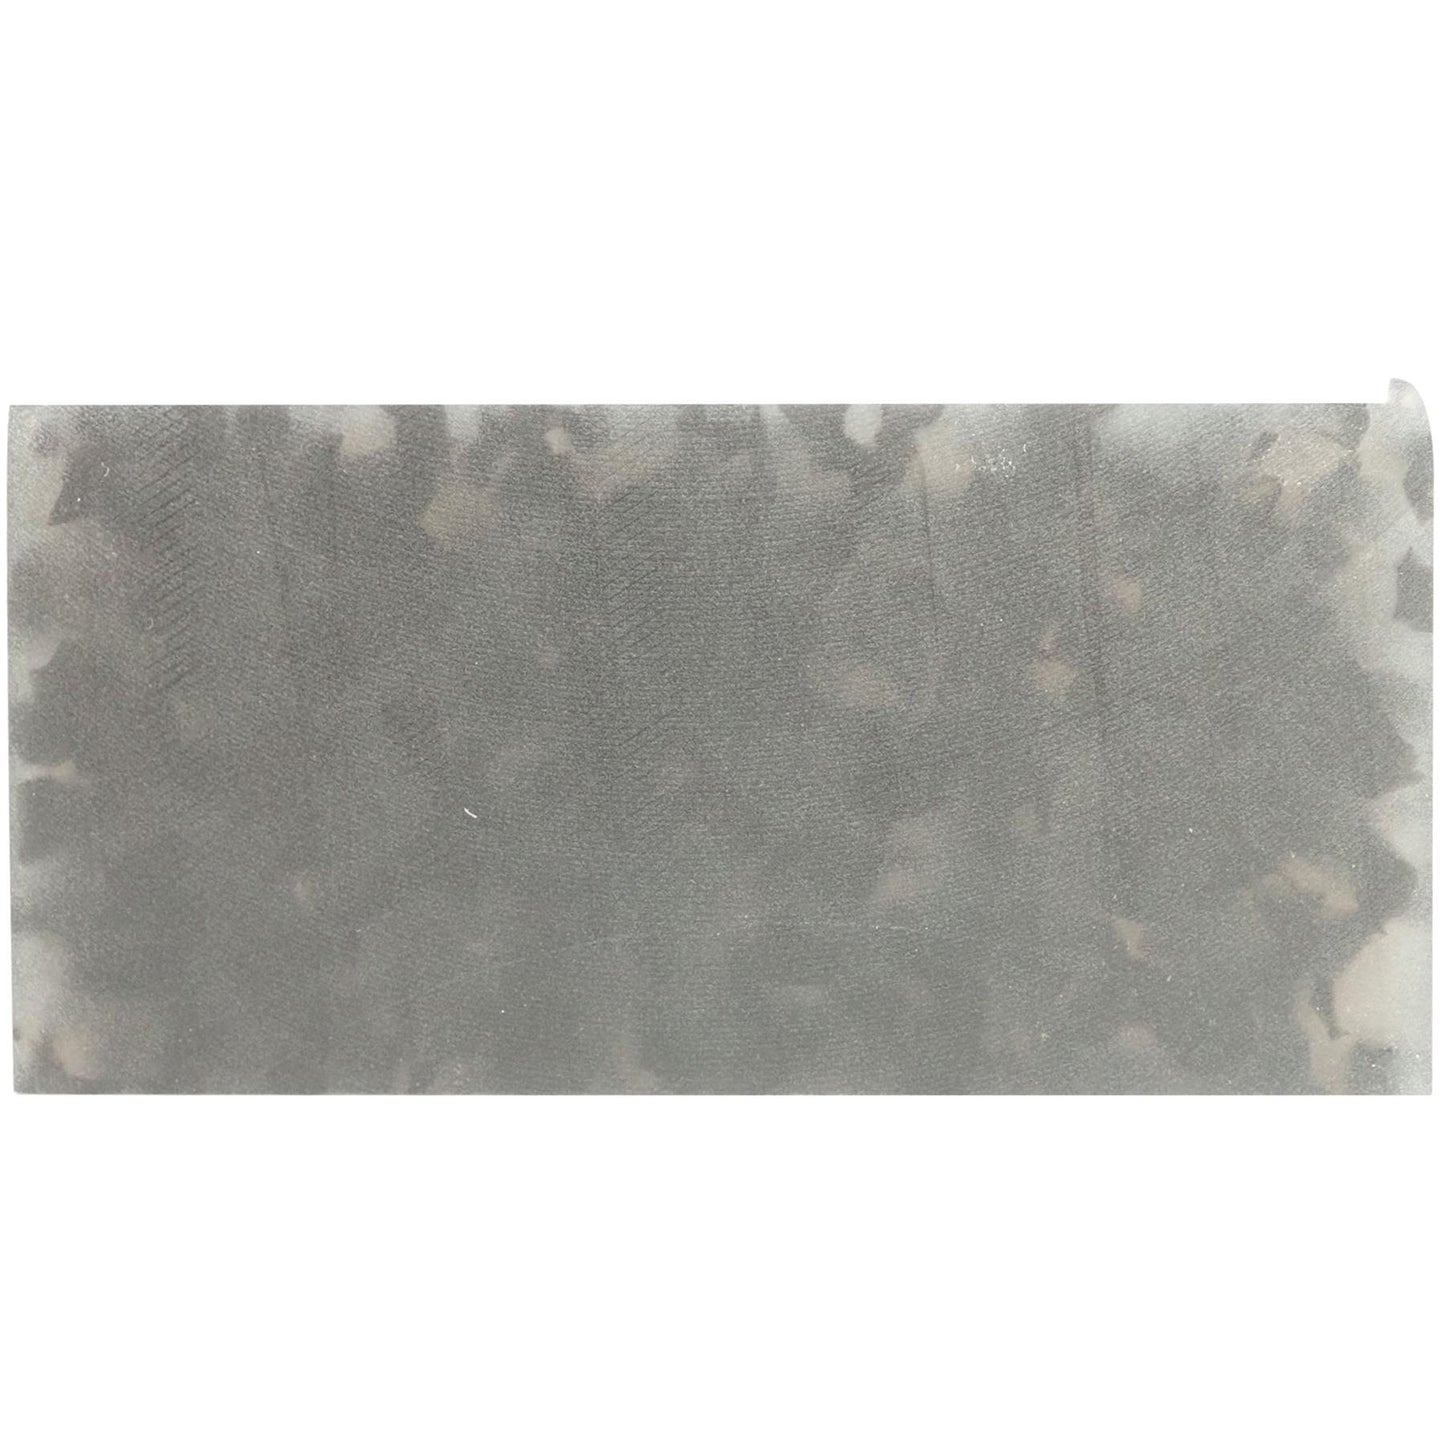 Incudo N8 Tortoiseshell Cellulose Acetate Block - 165x100x20mm